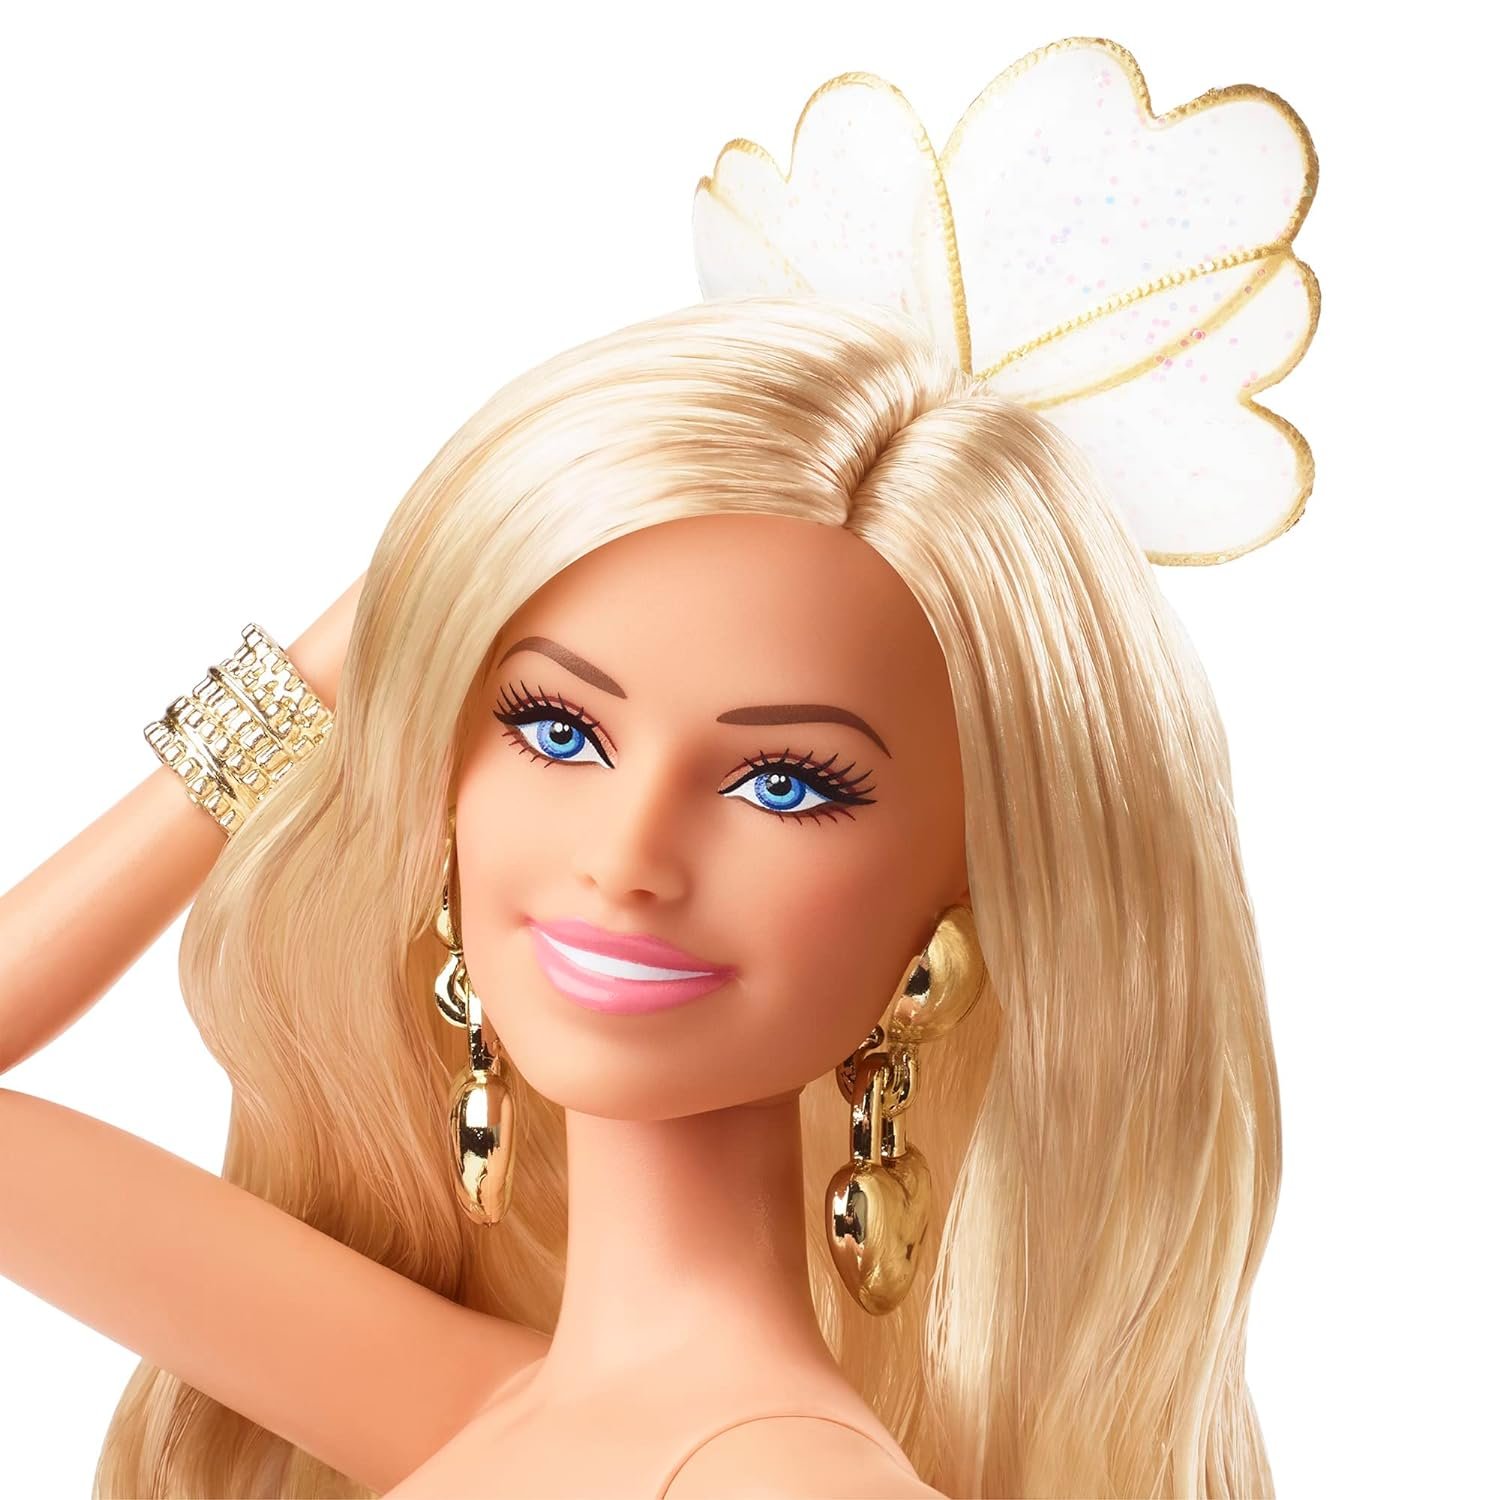 Barbie The Movie Doll image 9